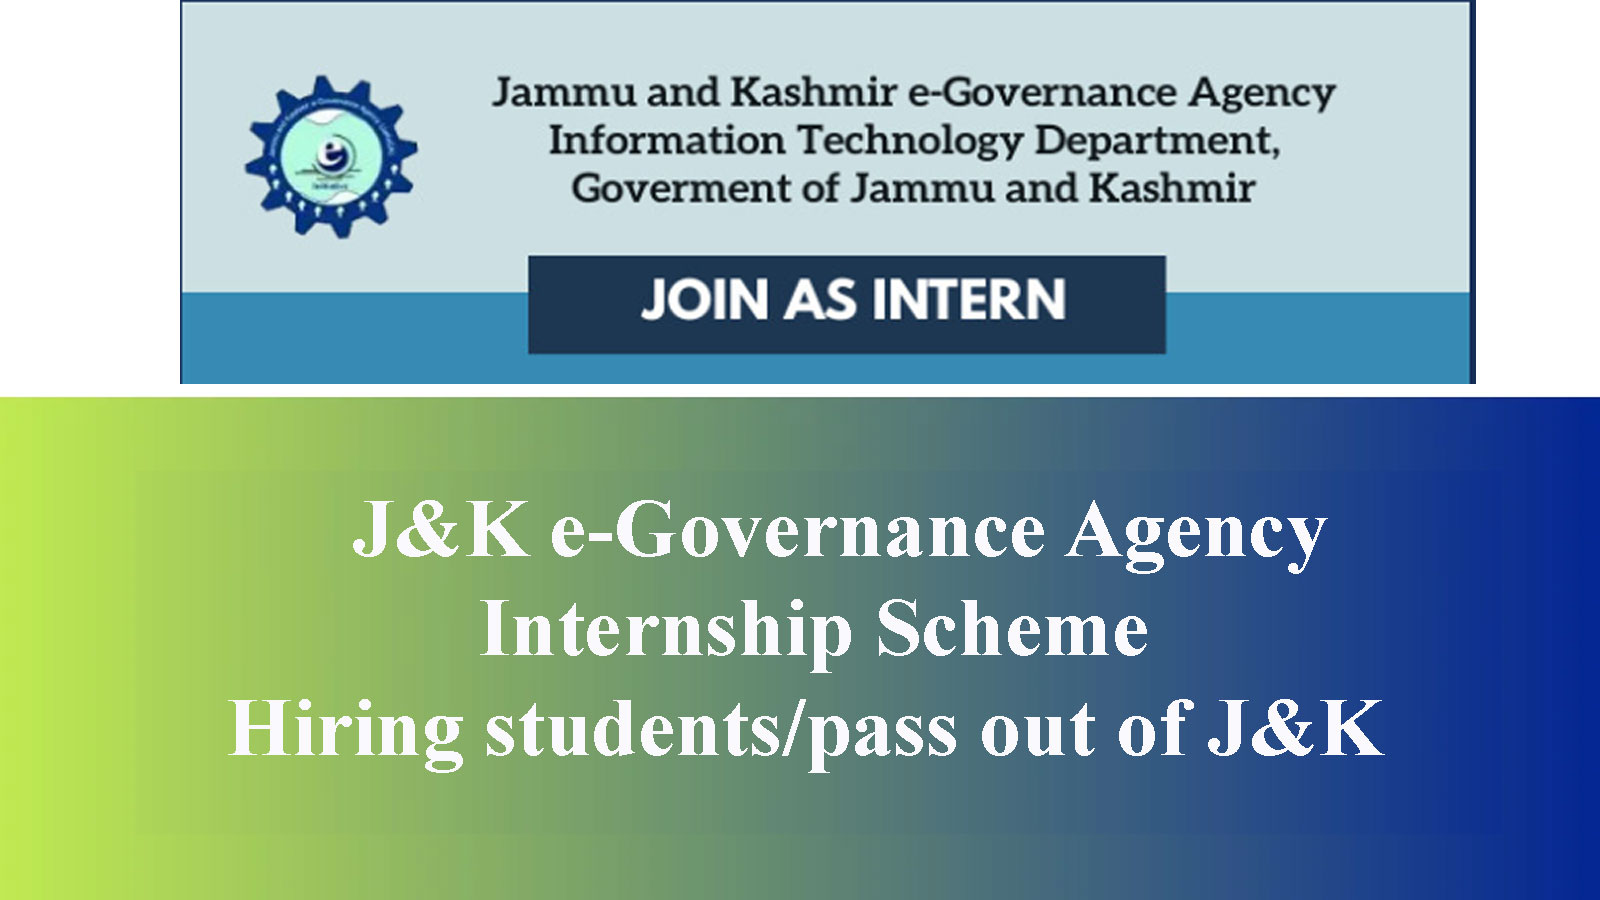 JK e-Governance Agency Internship Scheme, Hiring students/pass out of J-K